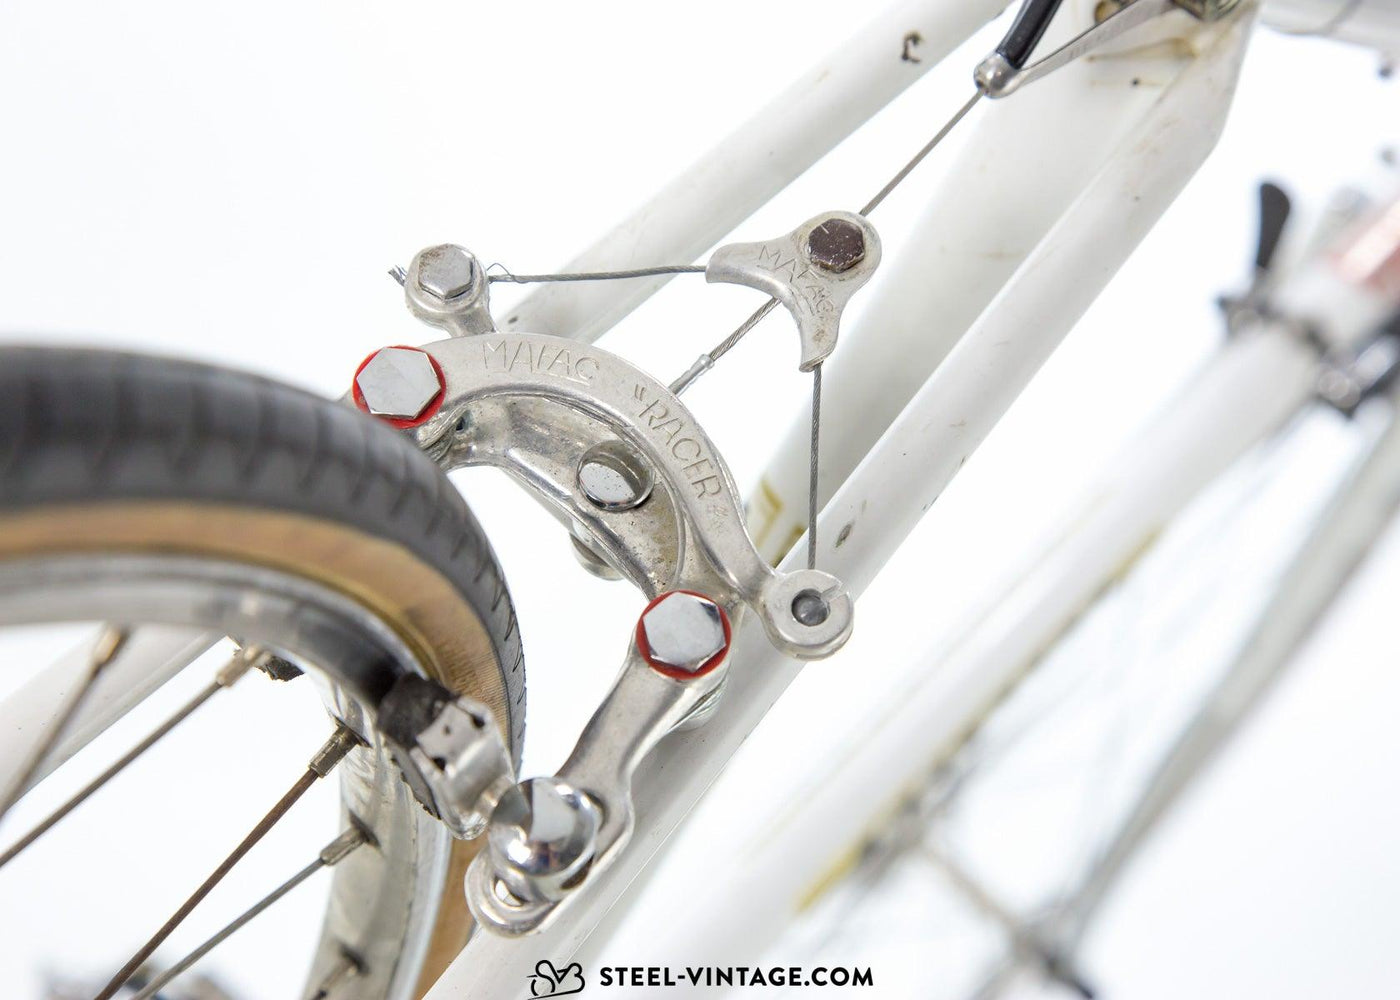 Peugeot PR10 Classic Road Bike 1973 - Steel Vintage Bikes